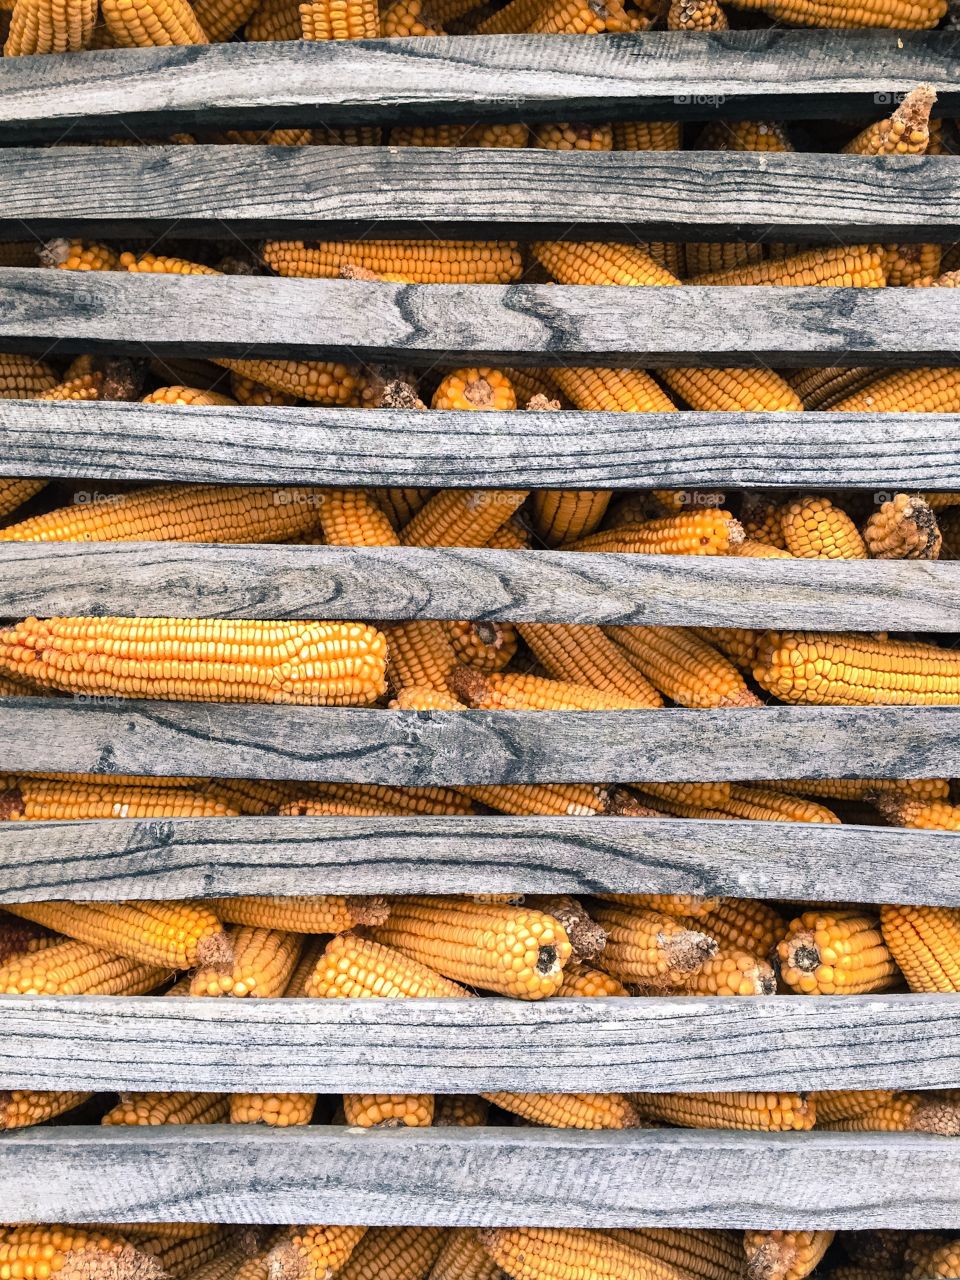 Corn on farm. Store corn on farm